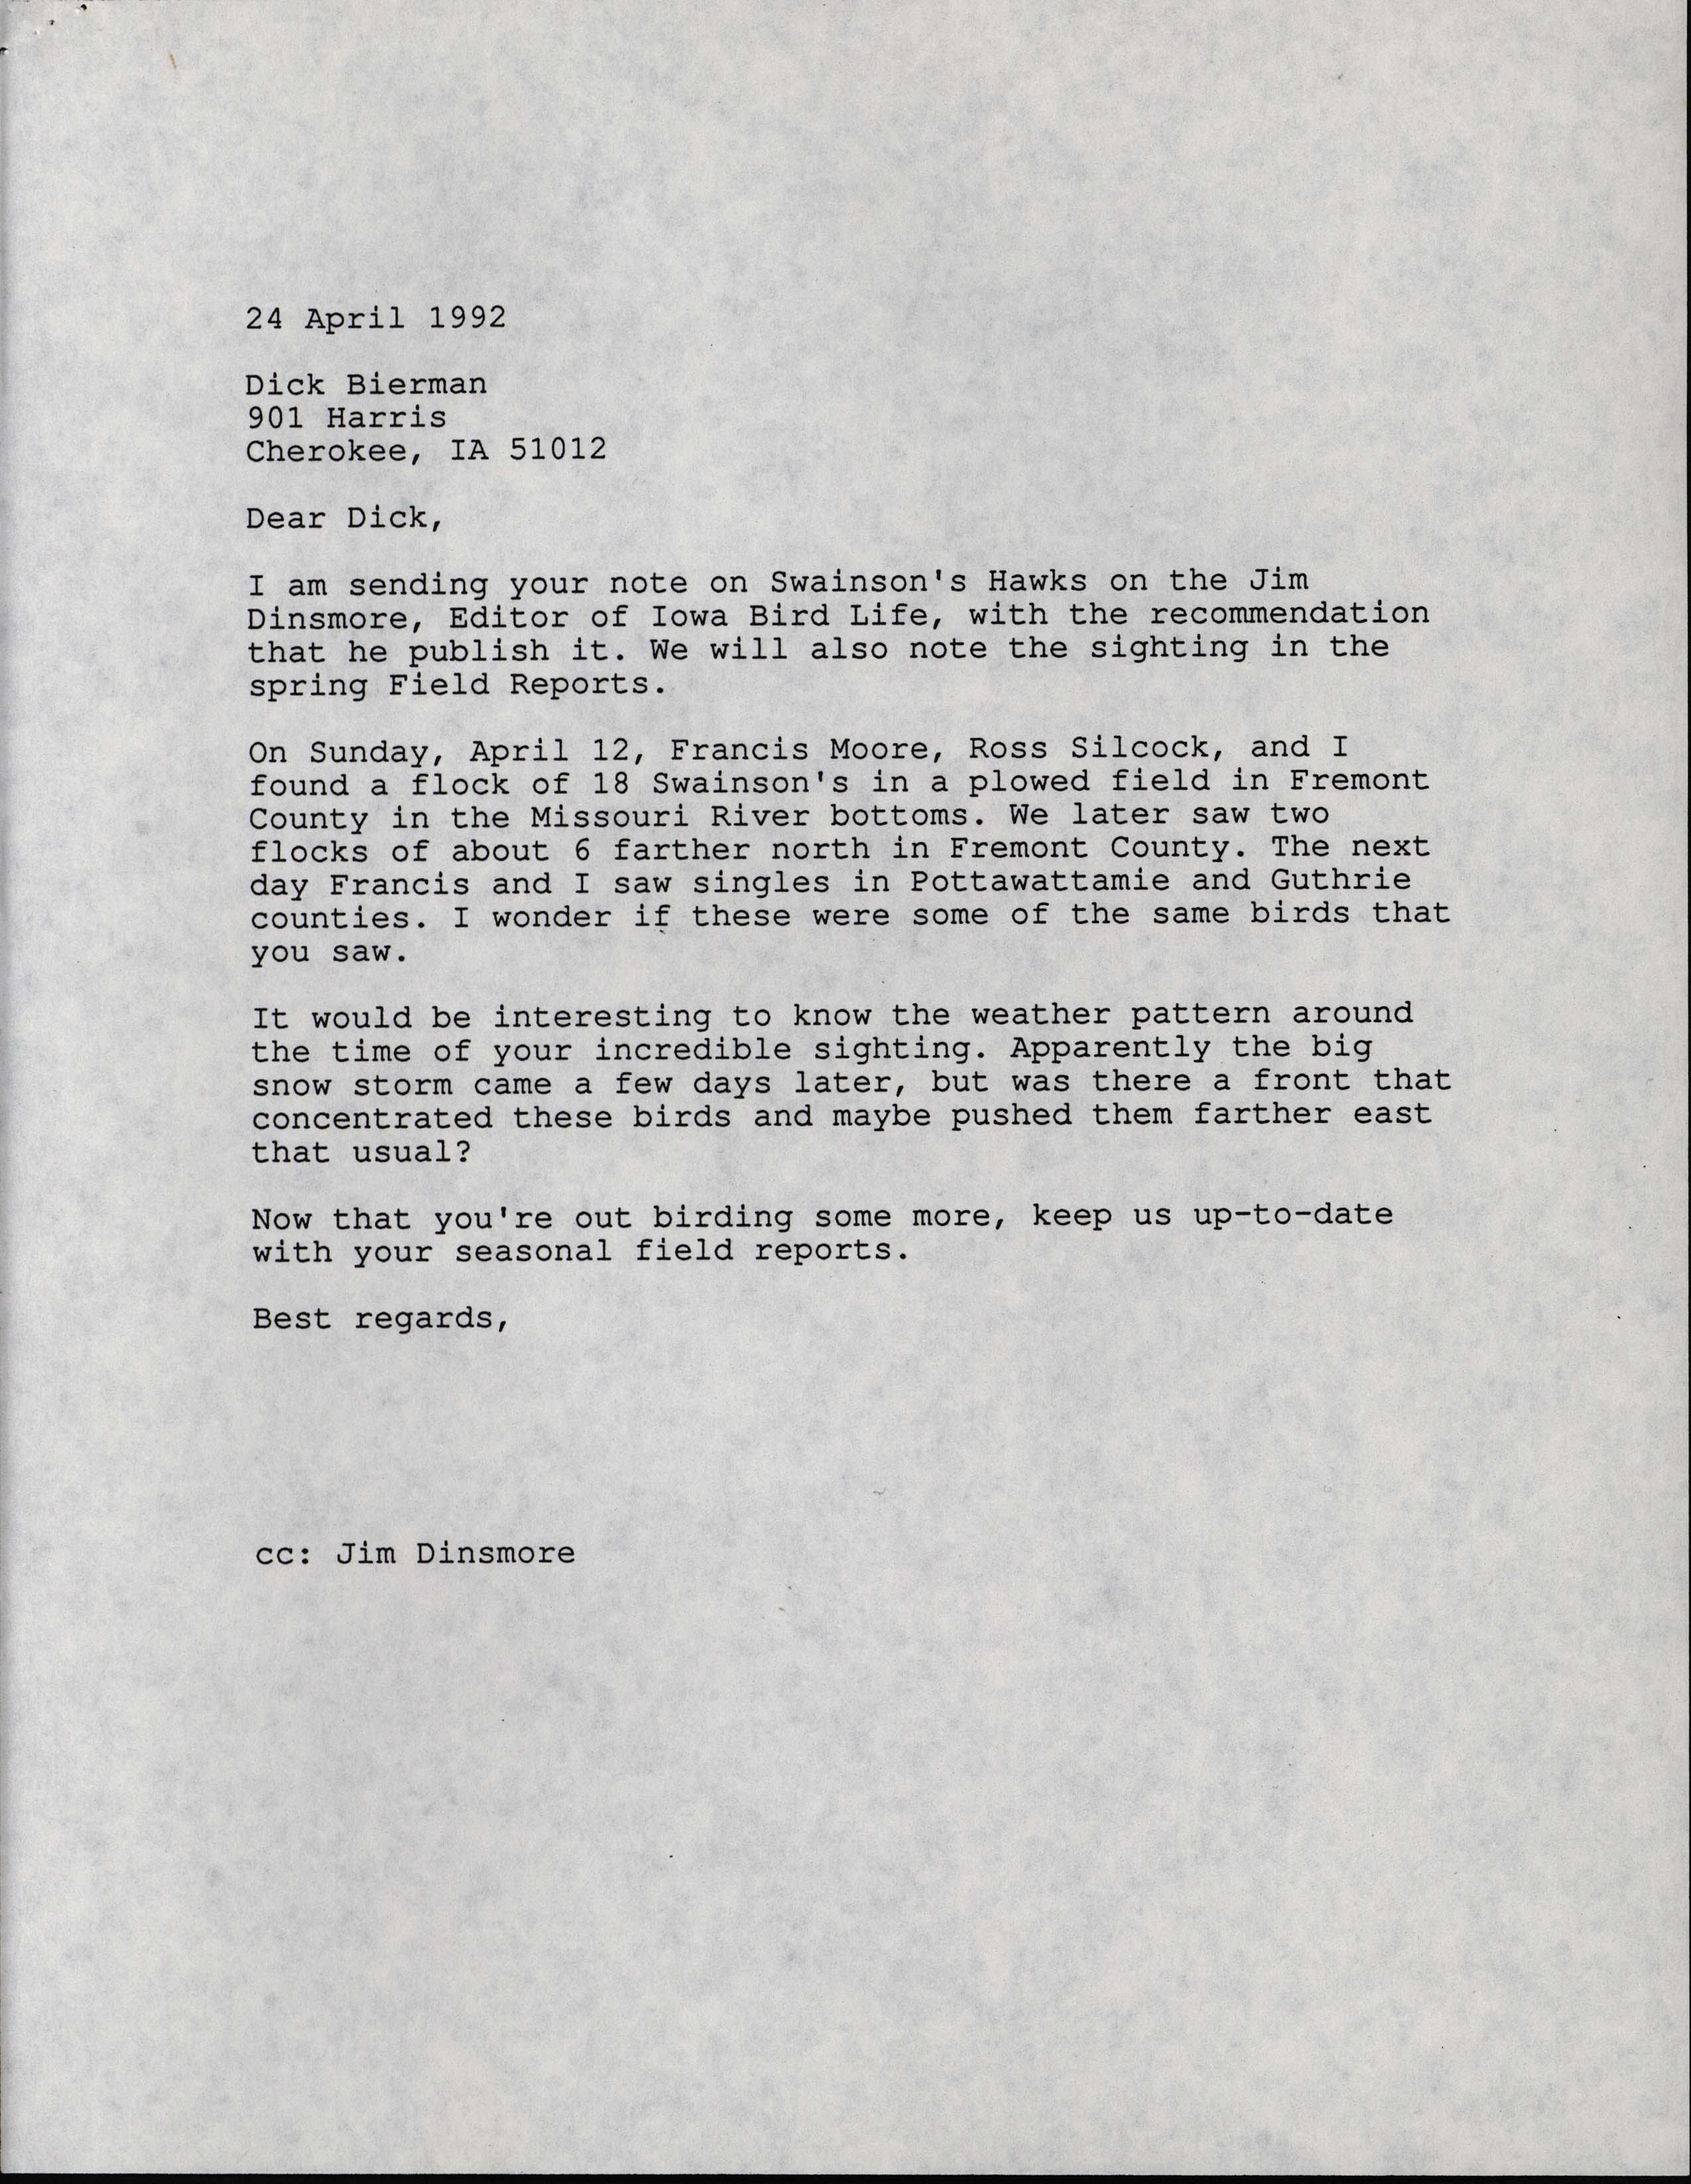 Thomas H. Kent letter to Dick Bierman regarding Swainson's Hawk sightings, April 24, 1992